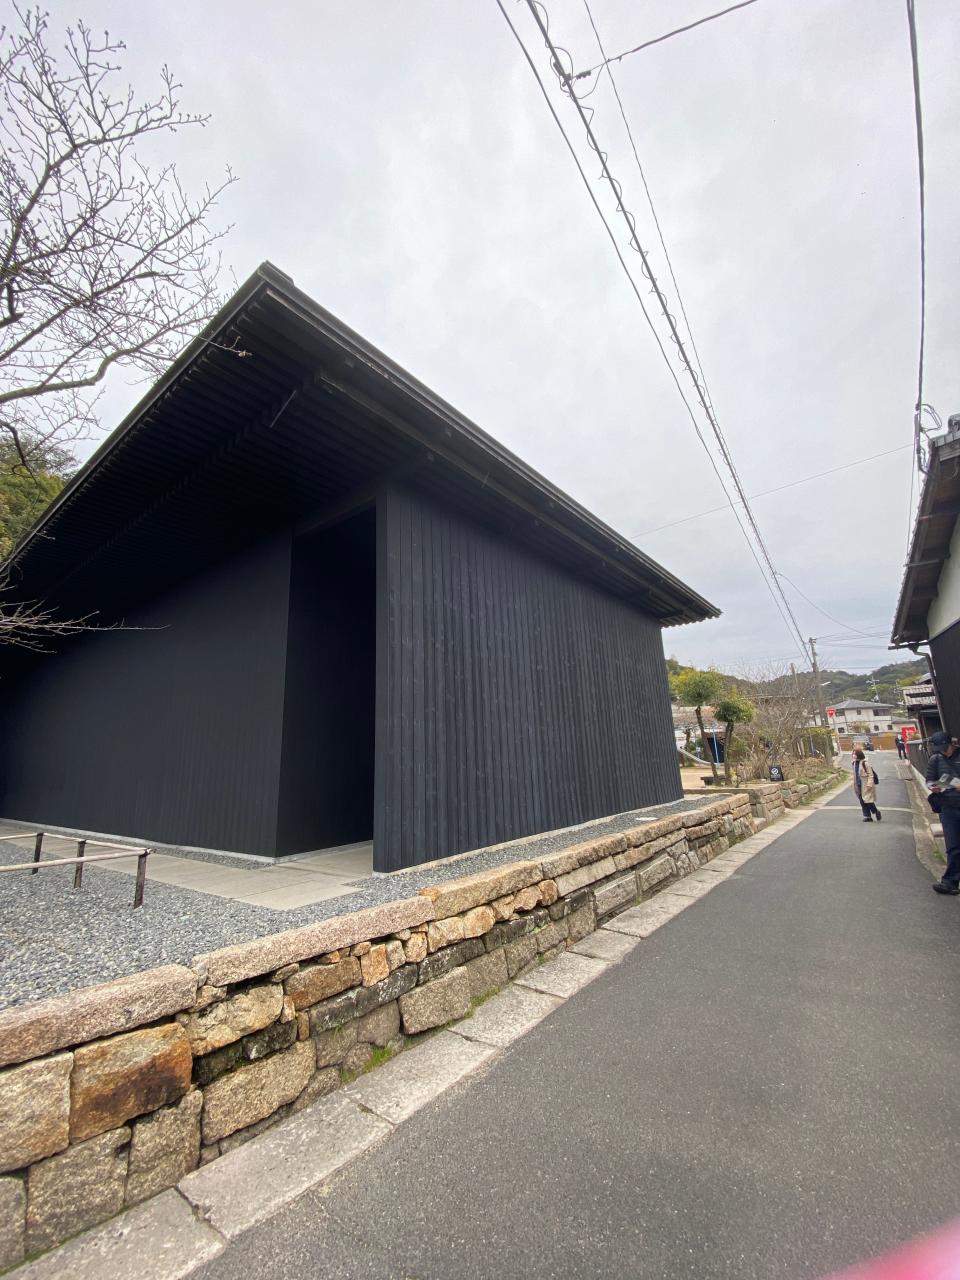 Minamidera, Naoshima, Japan, Kennedy Hill, "I Spent a Day Exploring One of Japan's Art Islands."